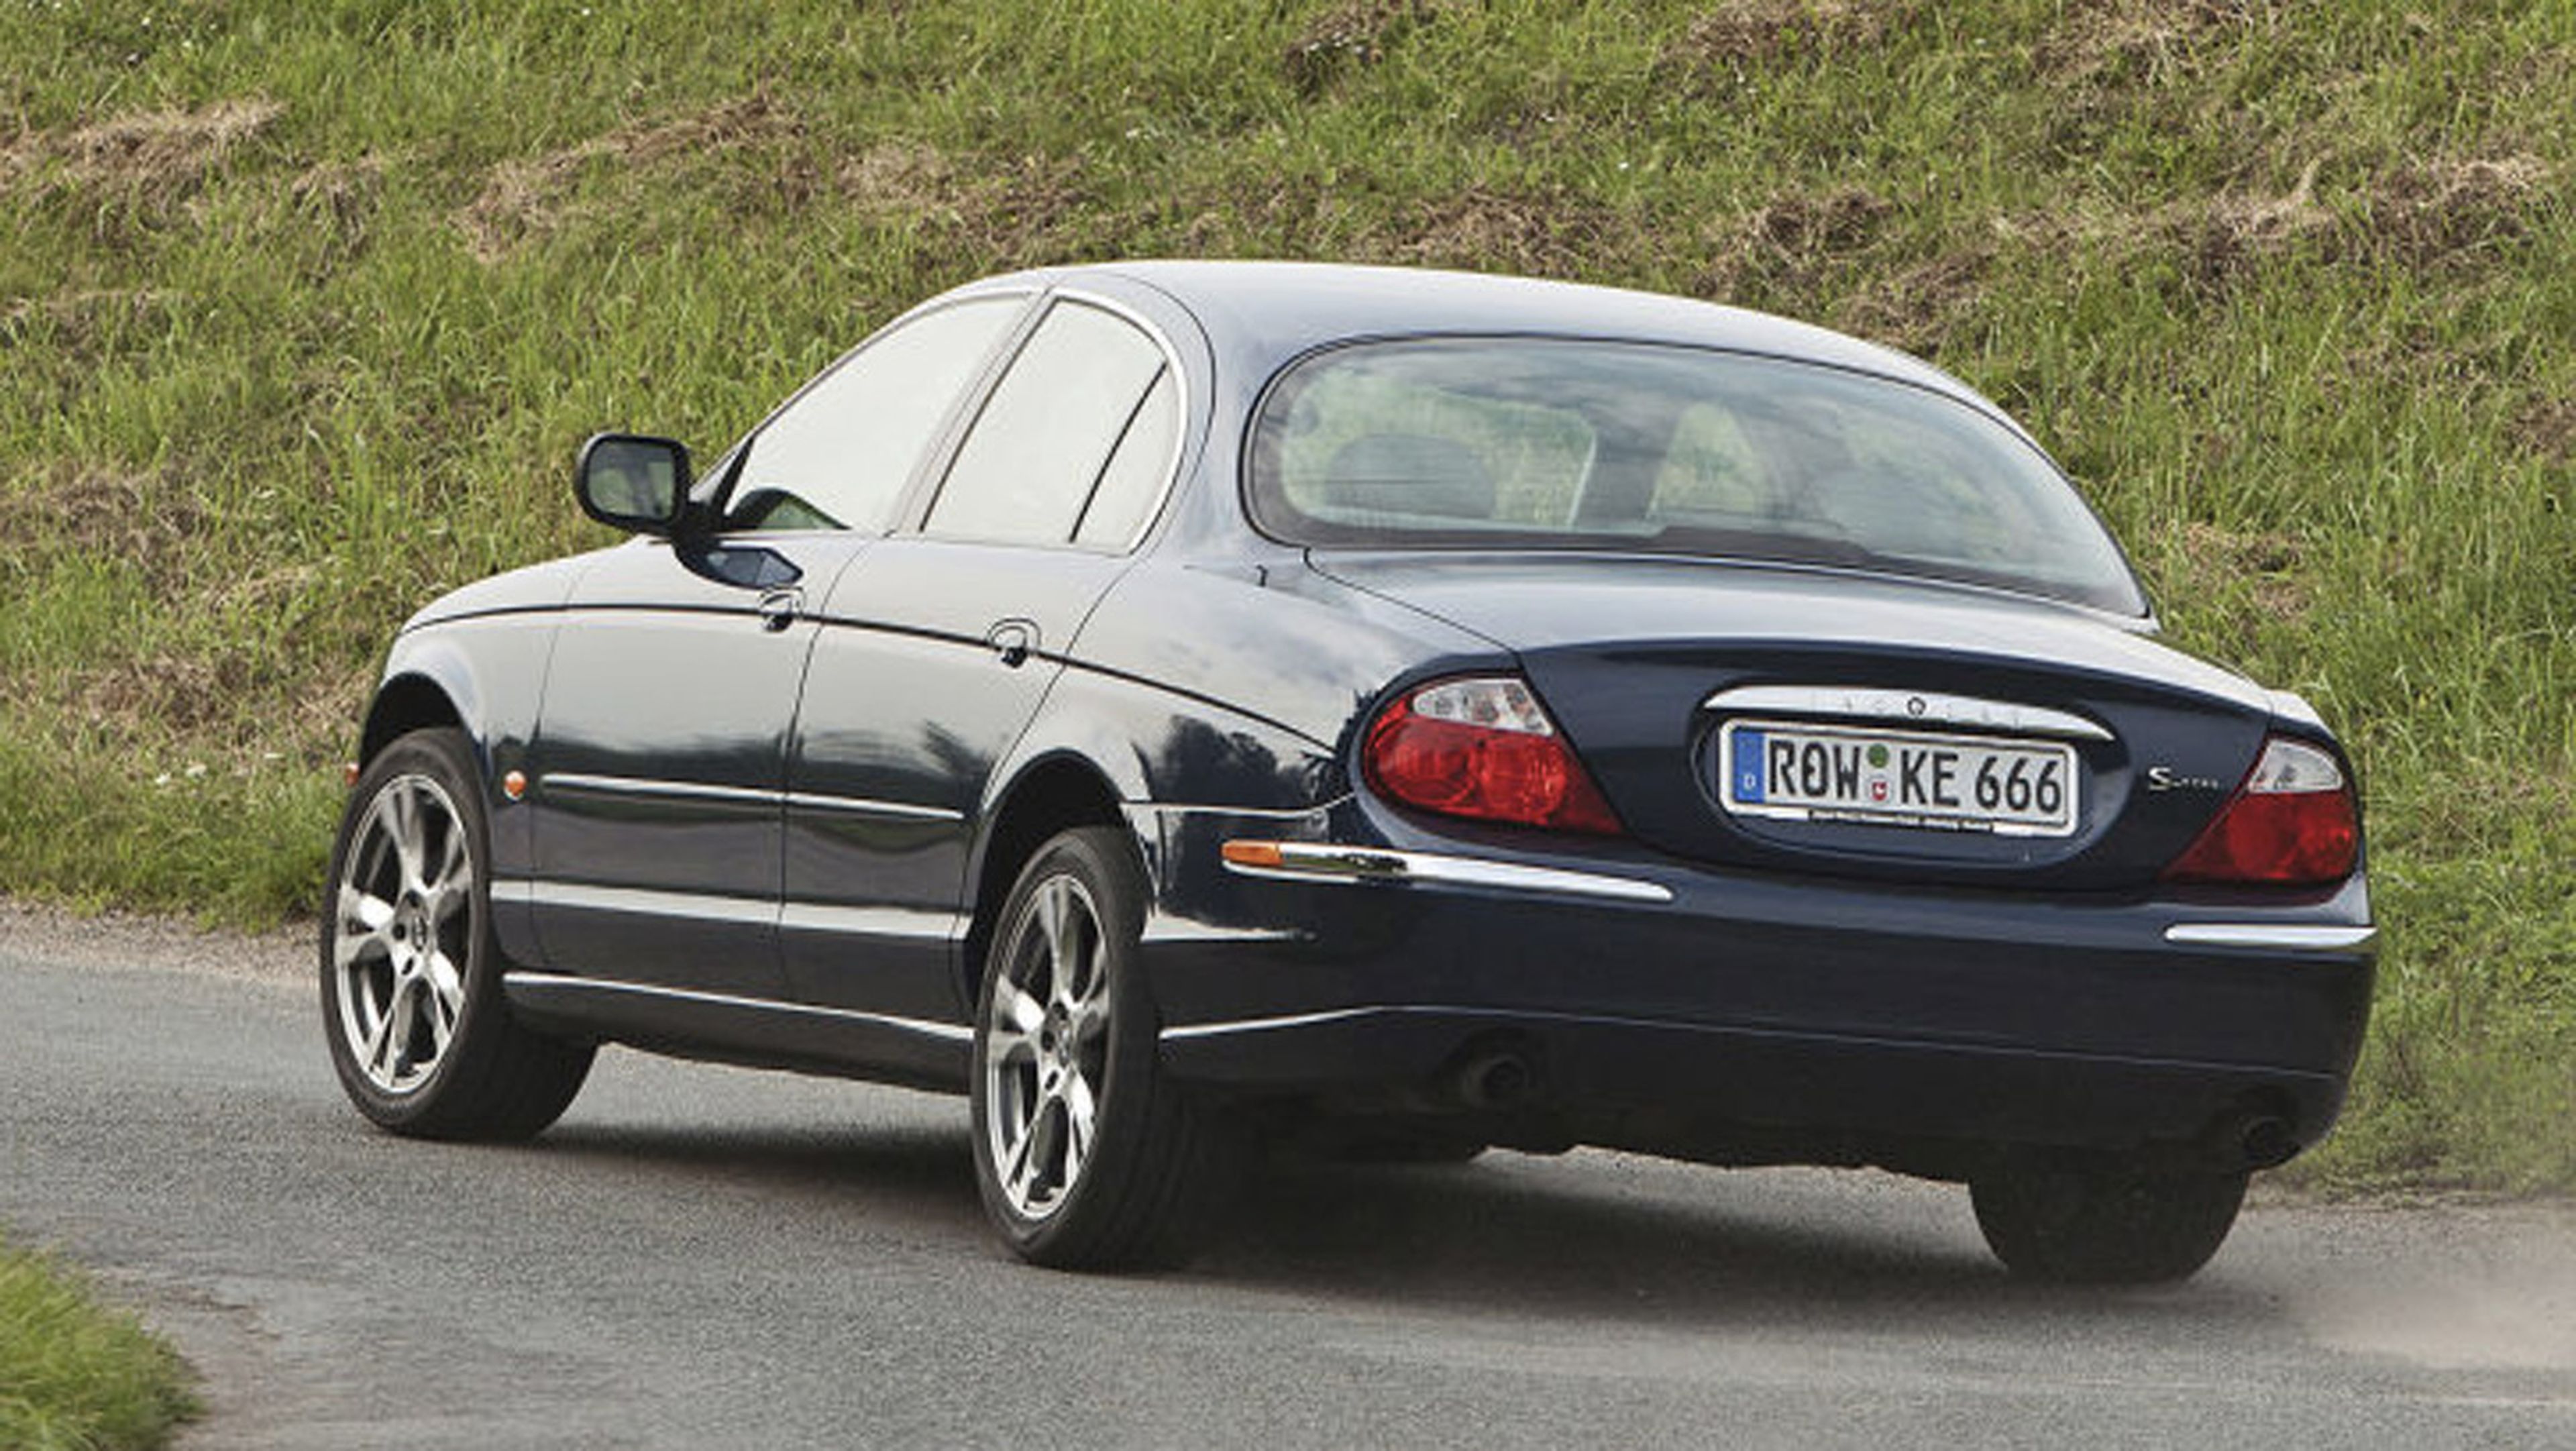 Coches de segunda mano que no debes comprar: Jaguar S-Type (I)